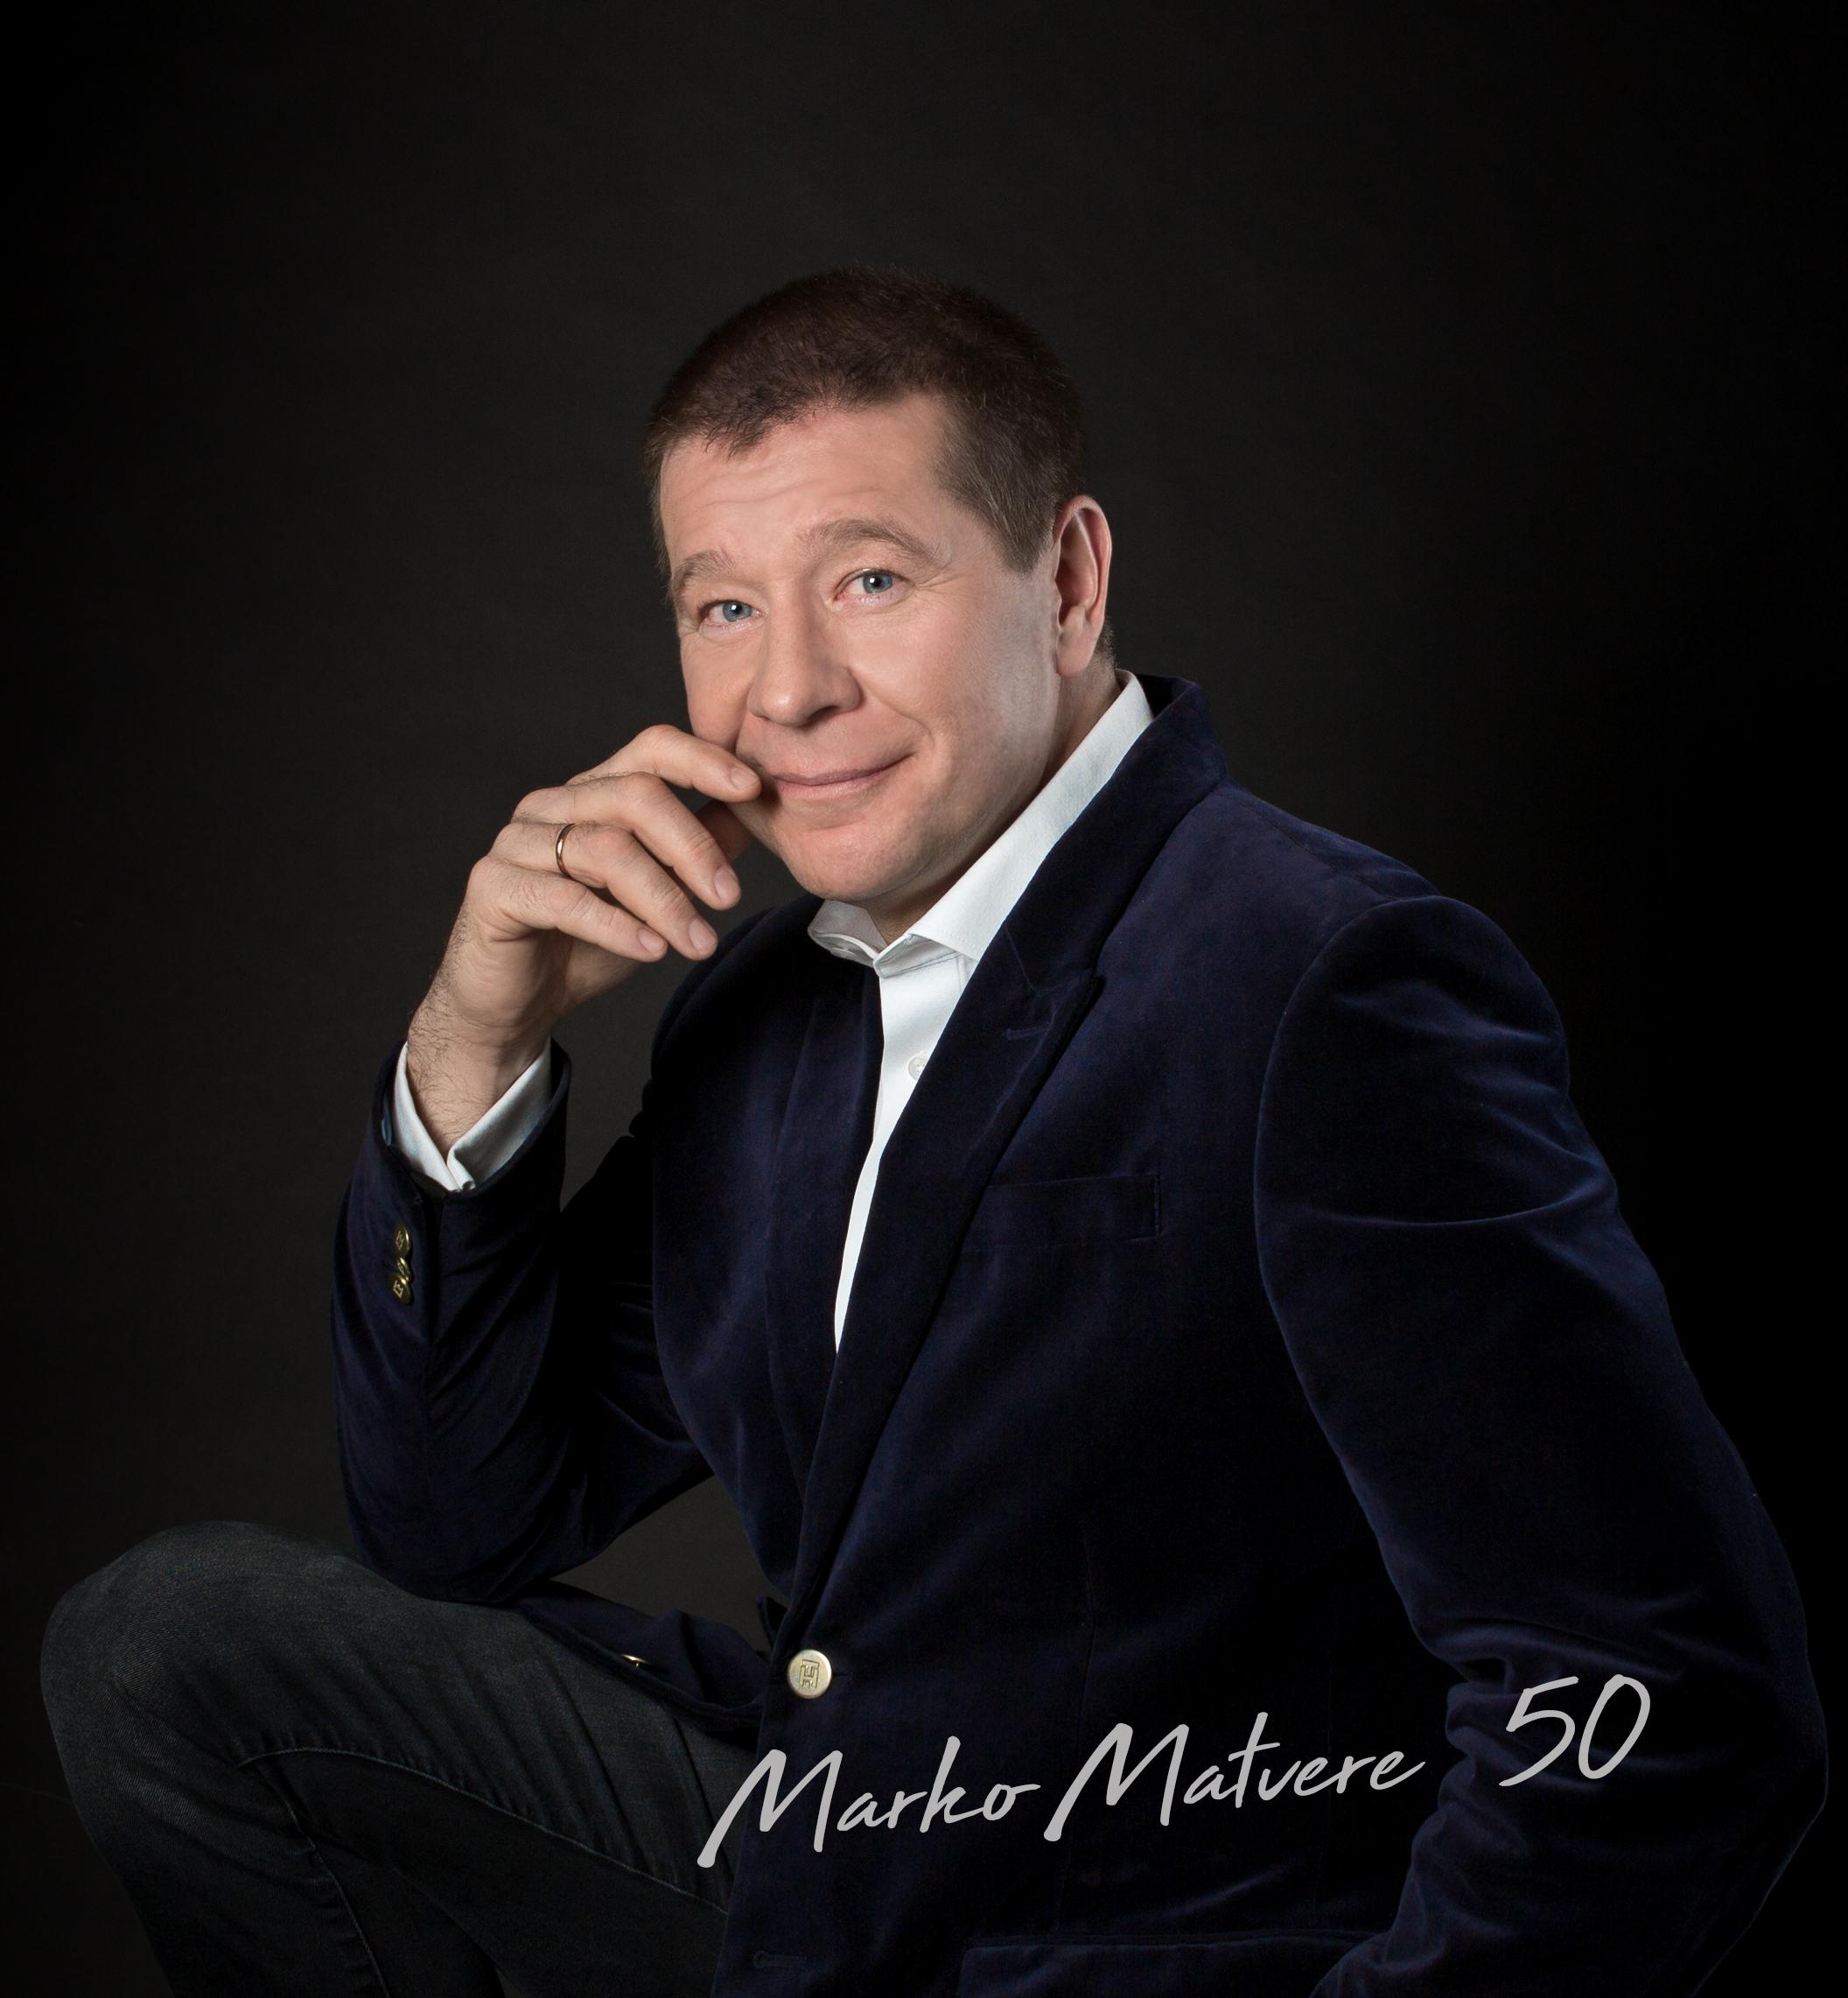 MARKO MATVERE - 50 (2018) CD